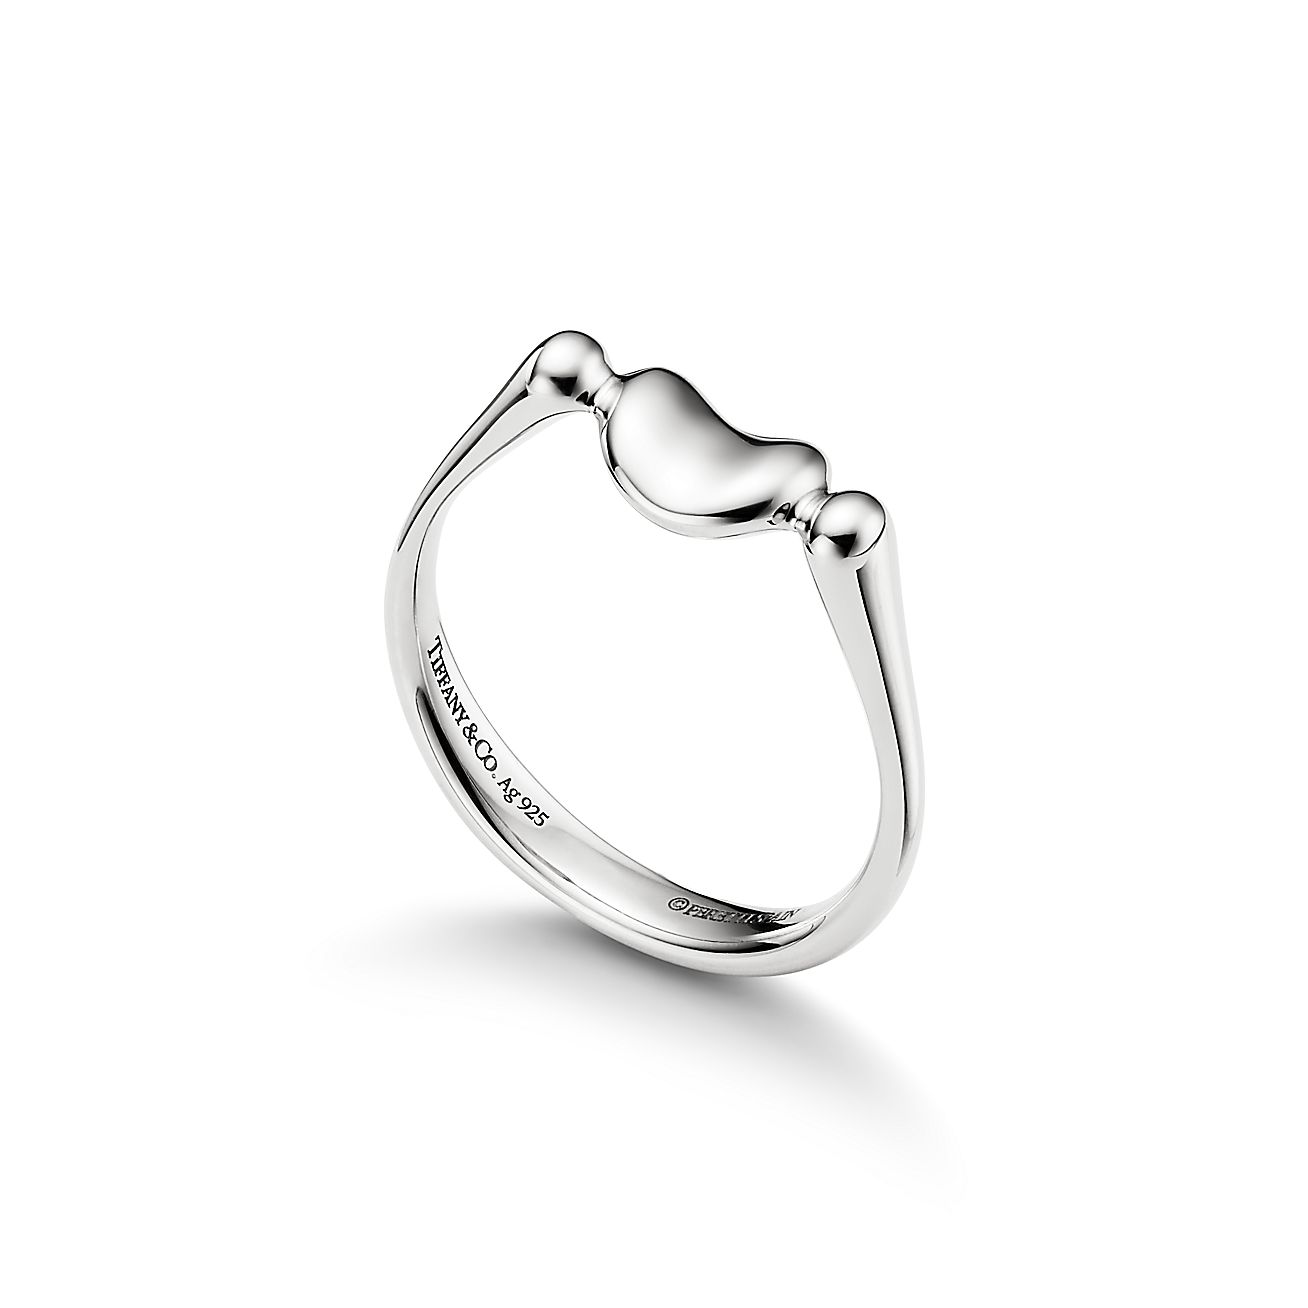 Sterling Silver Large Kidney Bean Key Ring